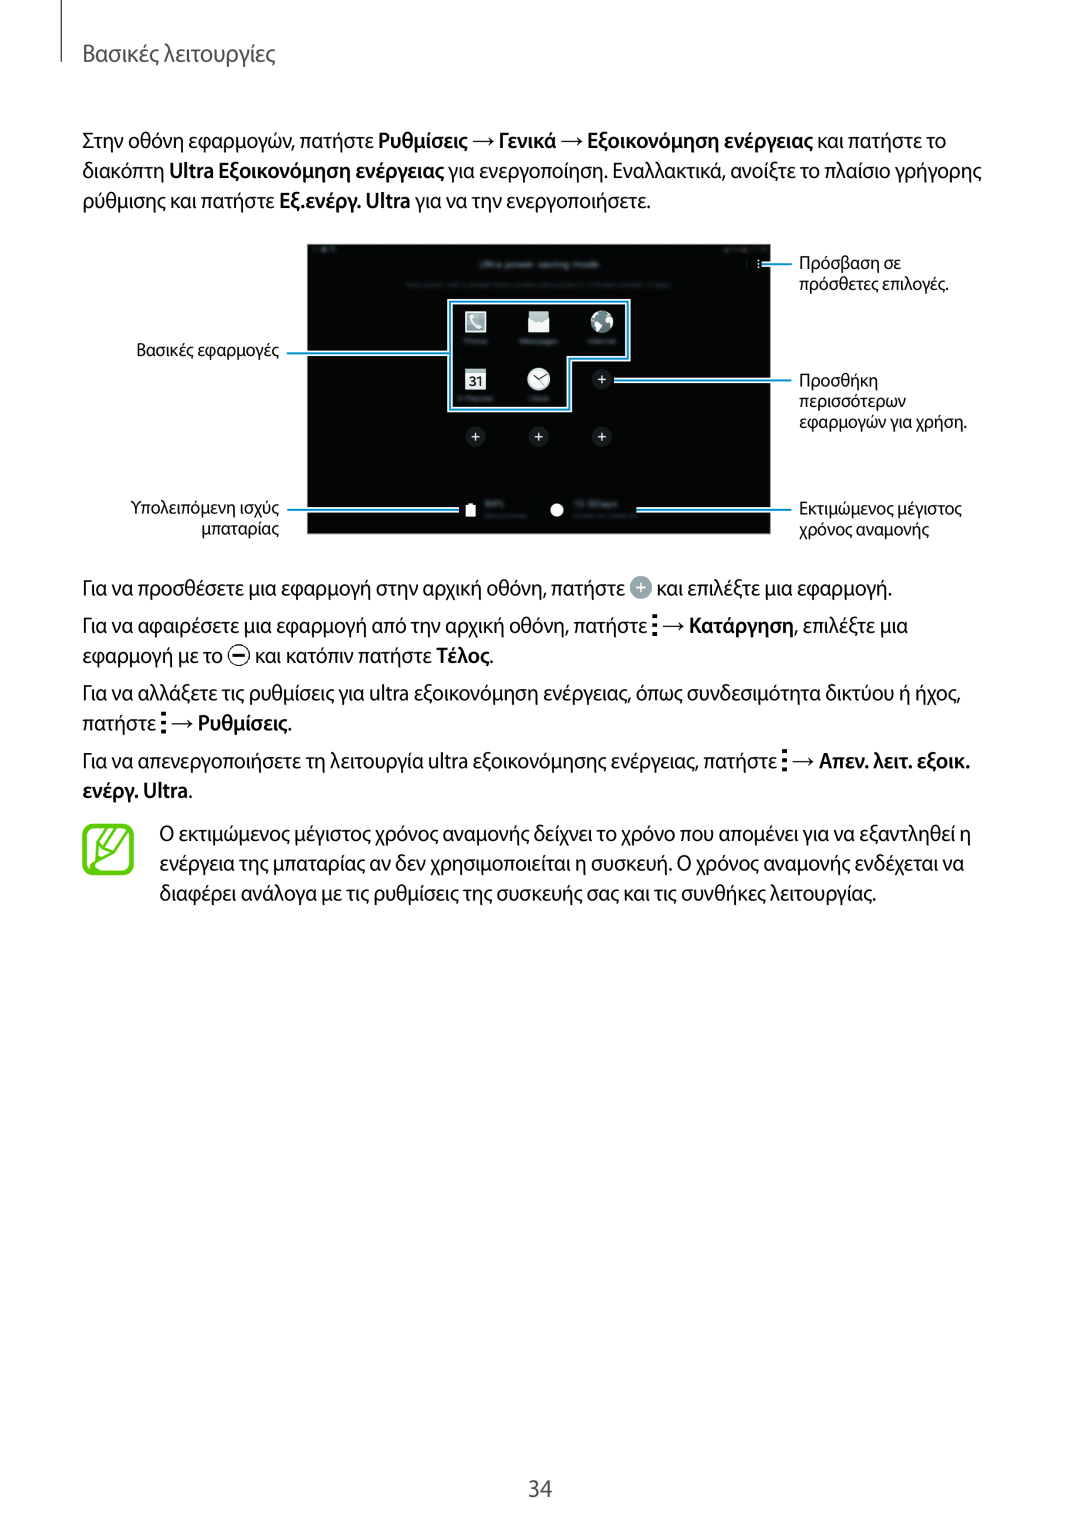 Samsung SM-T805NTSAEUR manual Βασικές λειτουργίες, Βασικές εφαρμογές, Προσθήκη, Εκτιμώμενος μέγιστος χρόνος αναμονής 